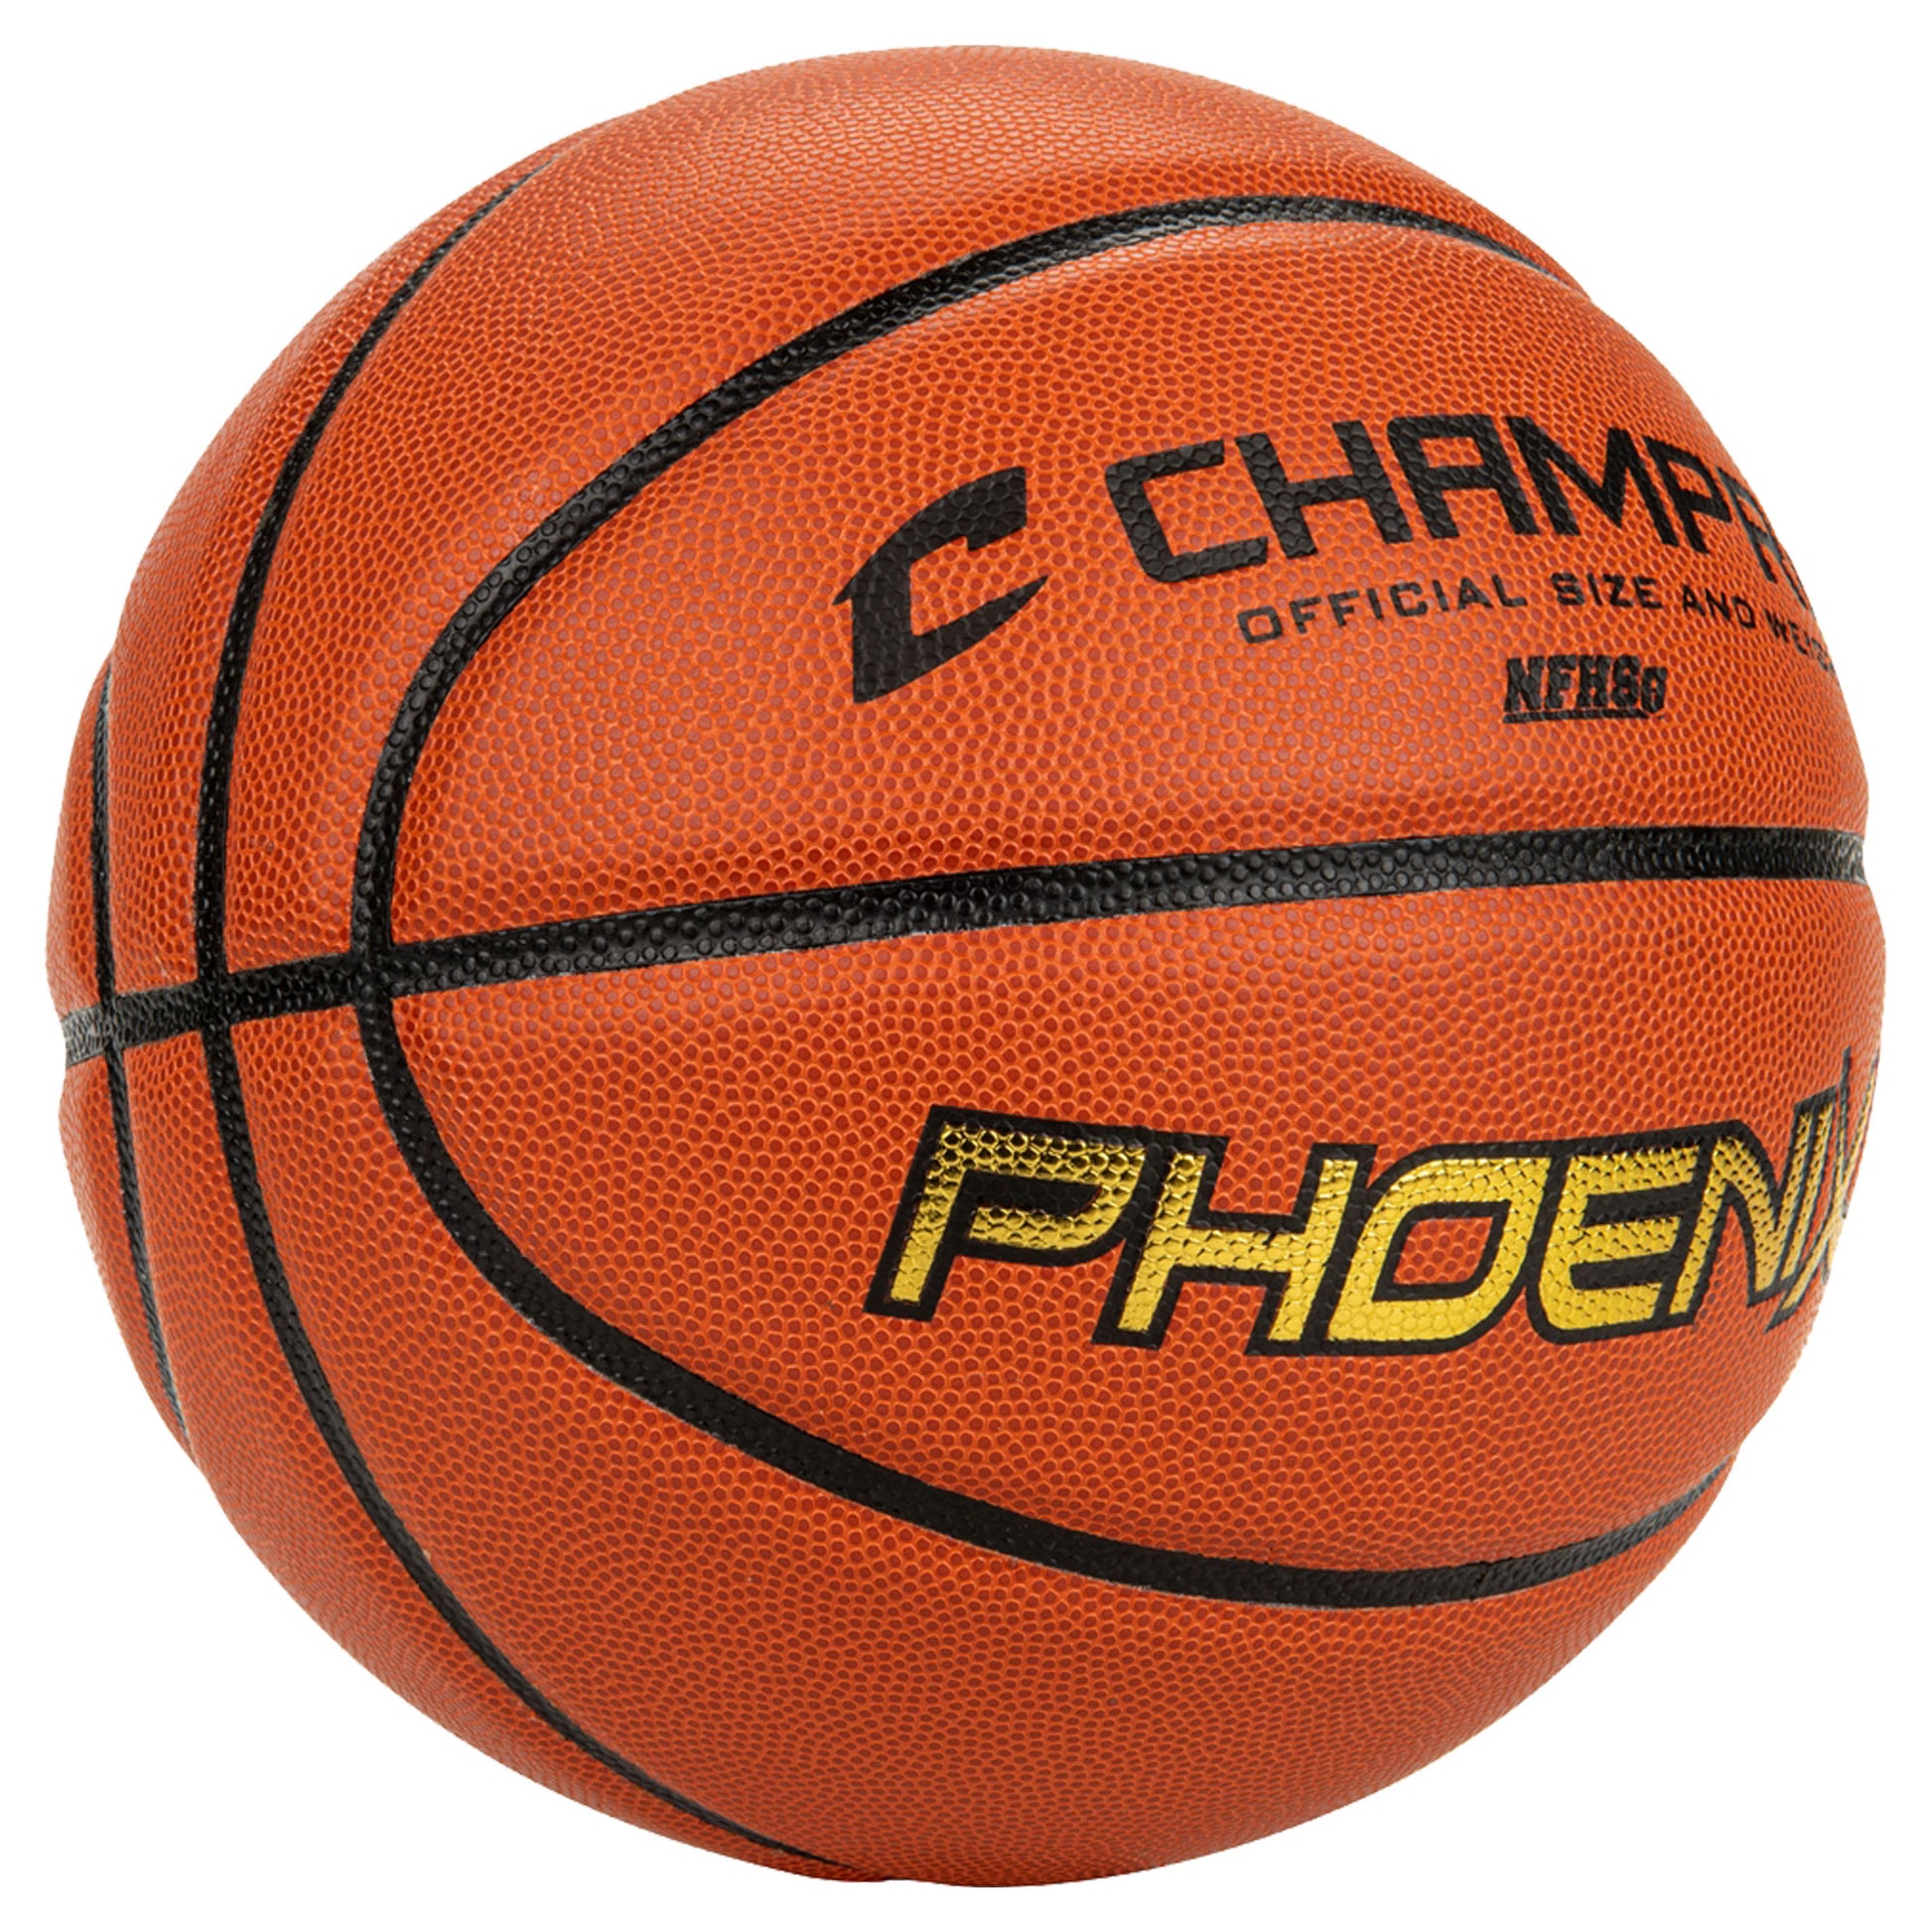 Champro Sports Phoenix Microfiber Indoor Basketball